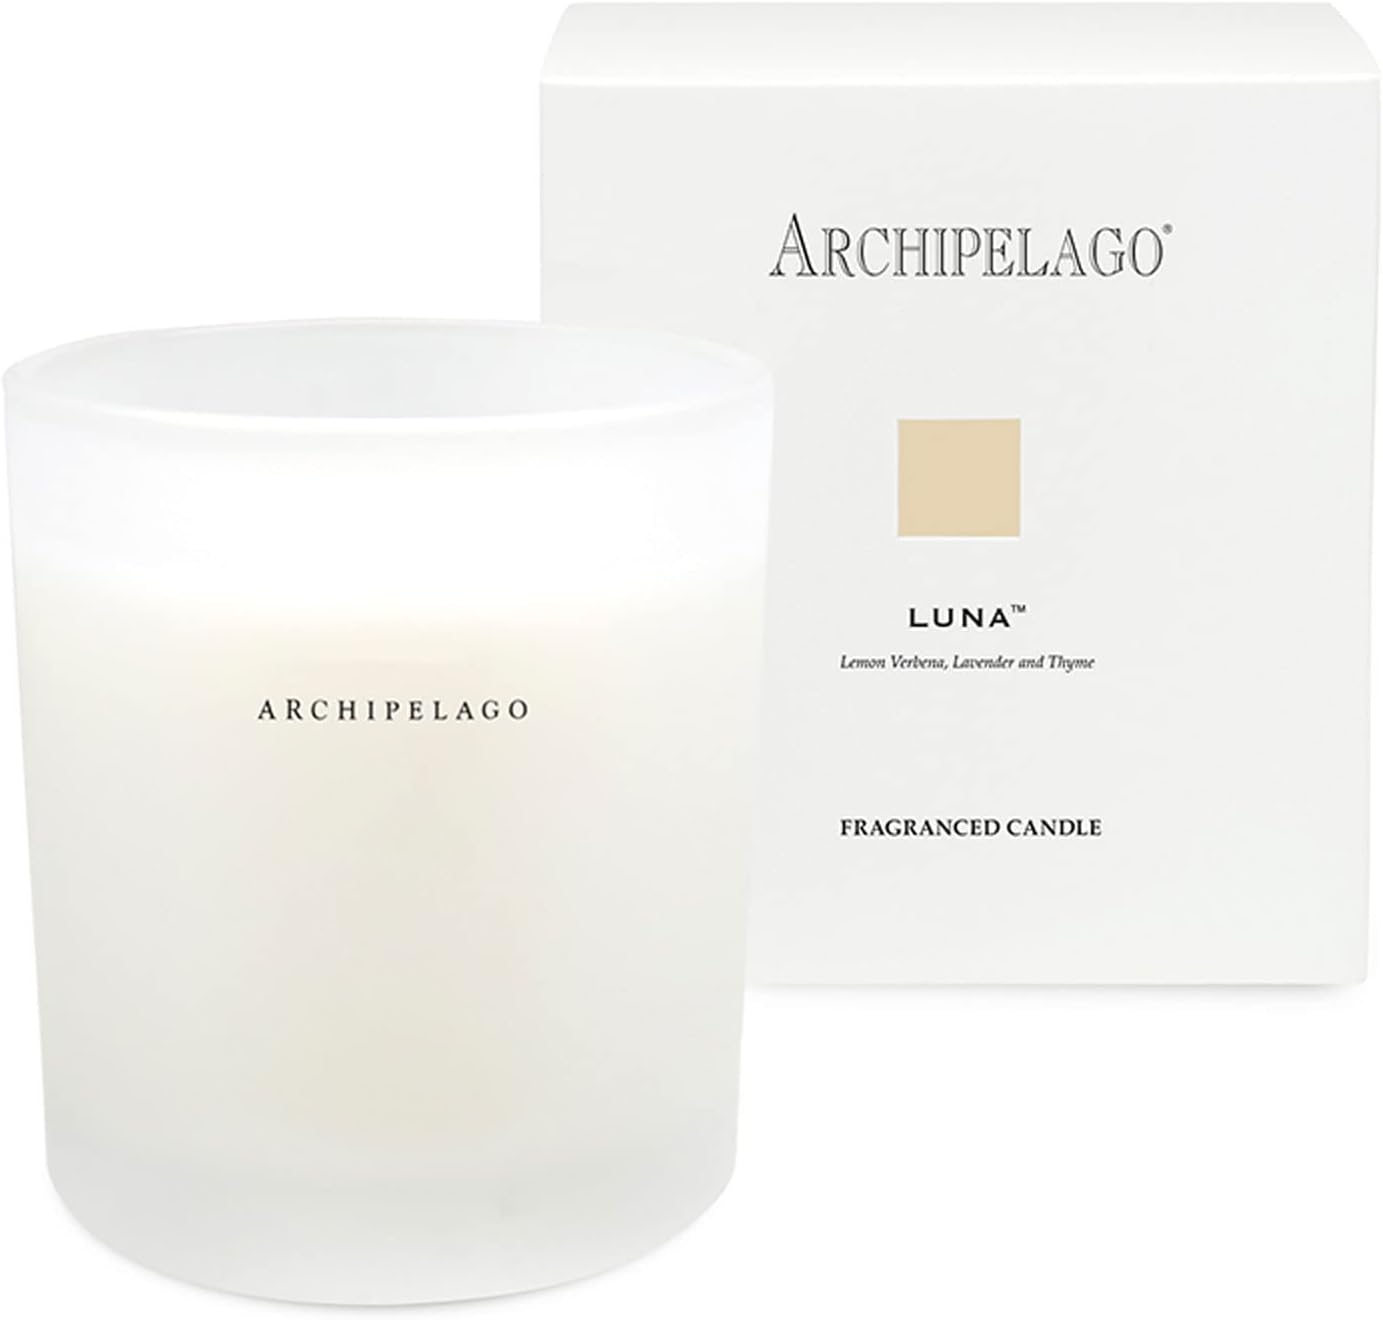 Archipelago Botanicals Luna Boxed Candle. Citrus Scent of Lemon Verbena, Lavender and Thyme. Natural Coconut Wax Burns 60 Hours (10 oz)